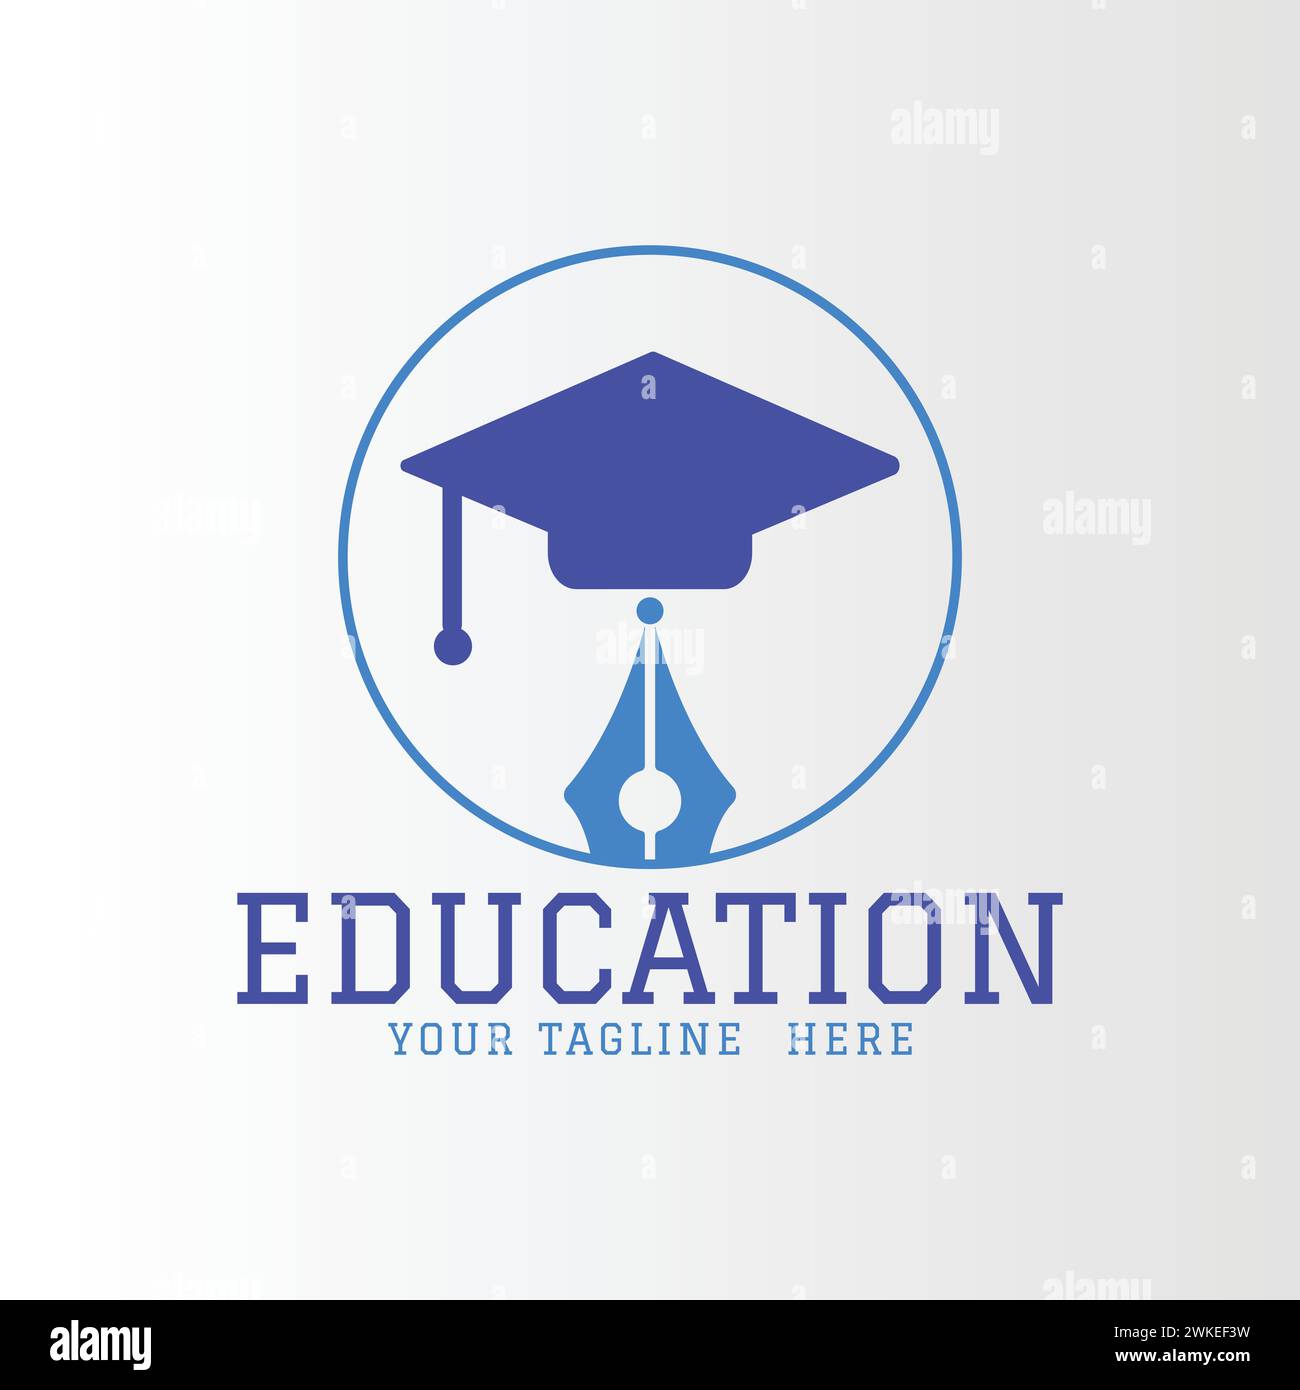 Education Logo Design And Vector Illustration. Stock Vector